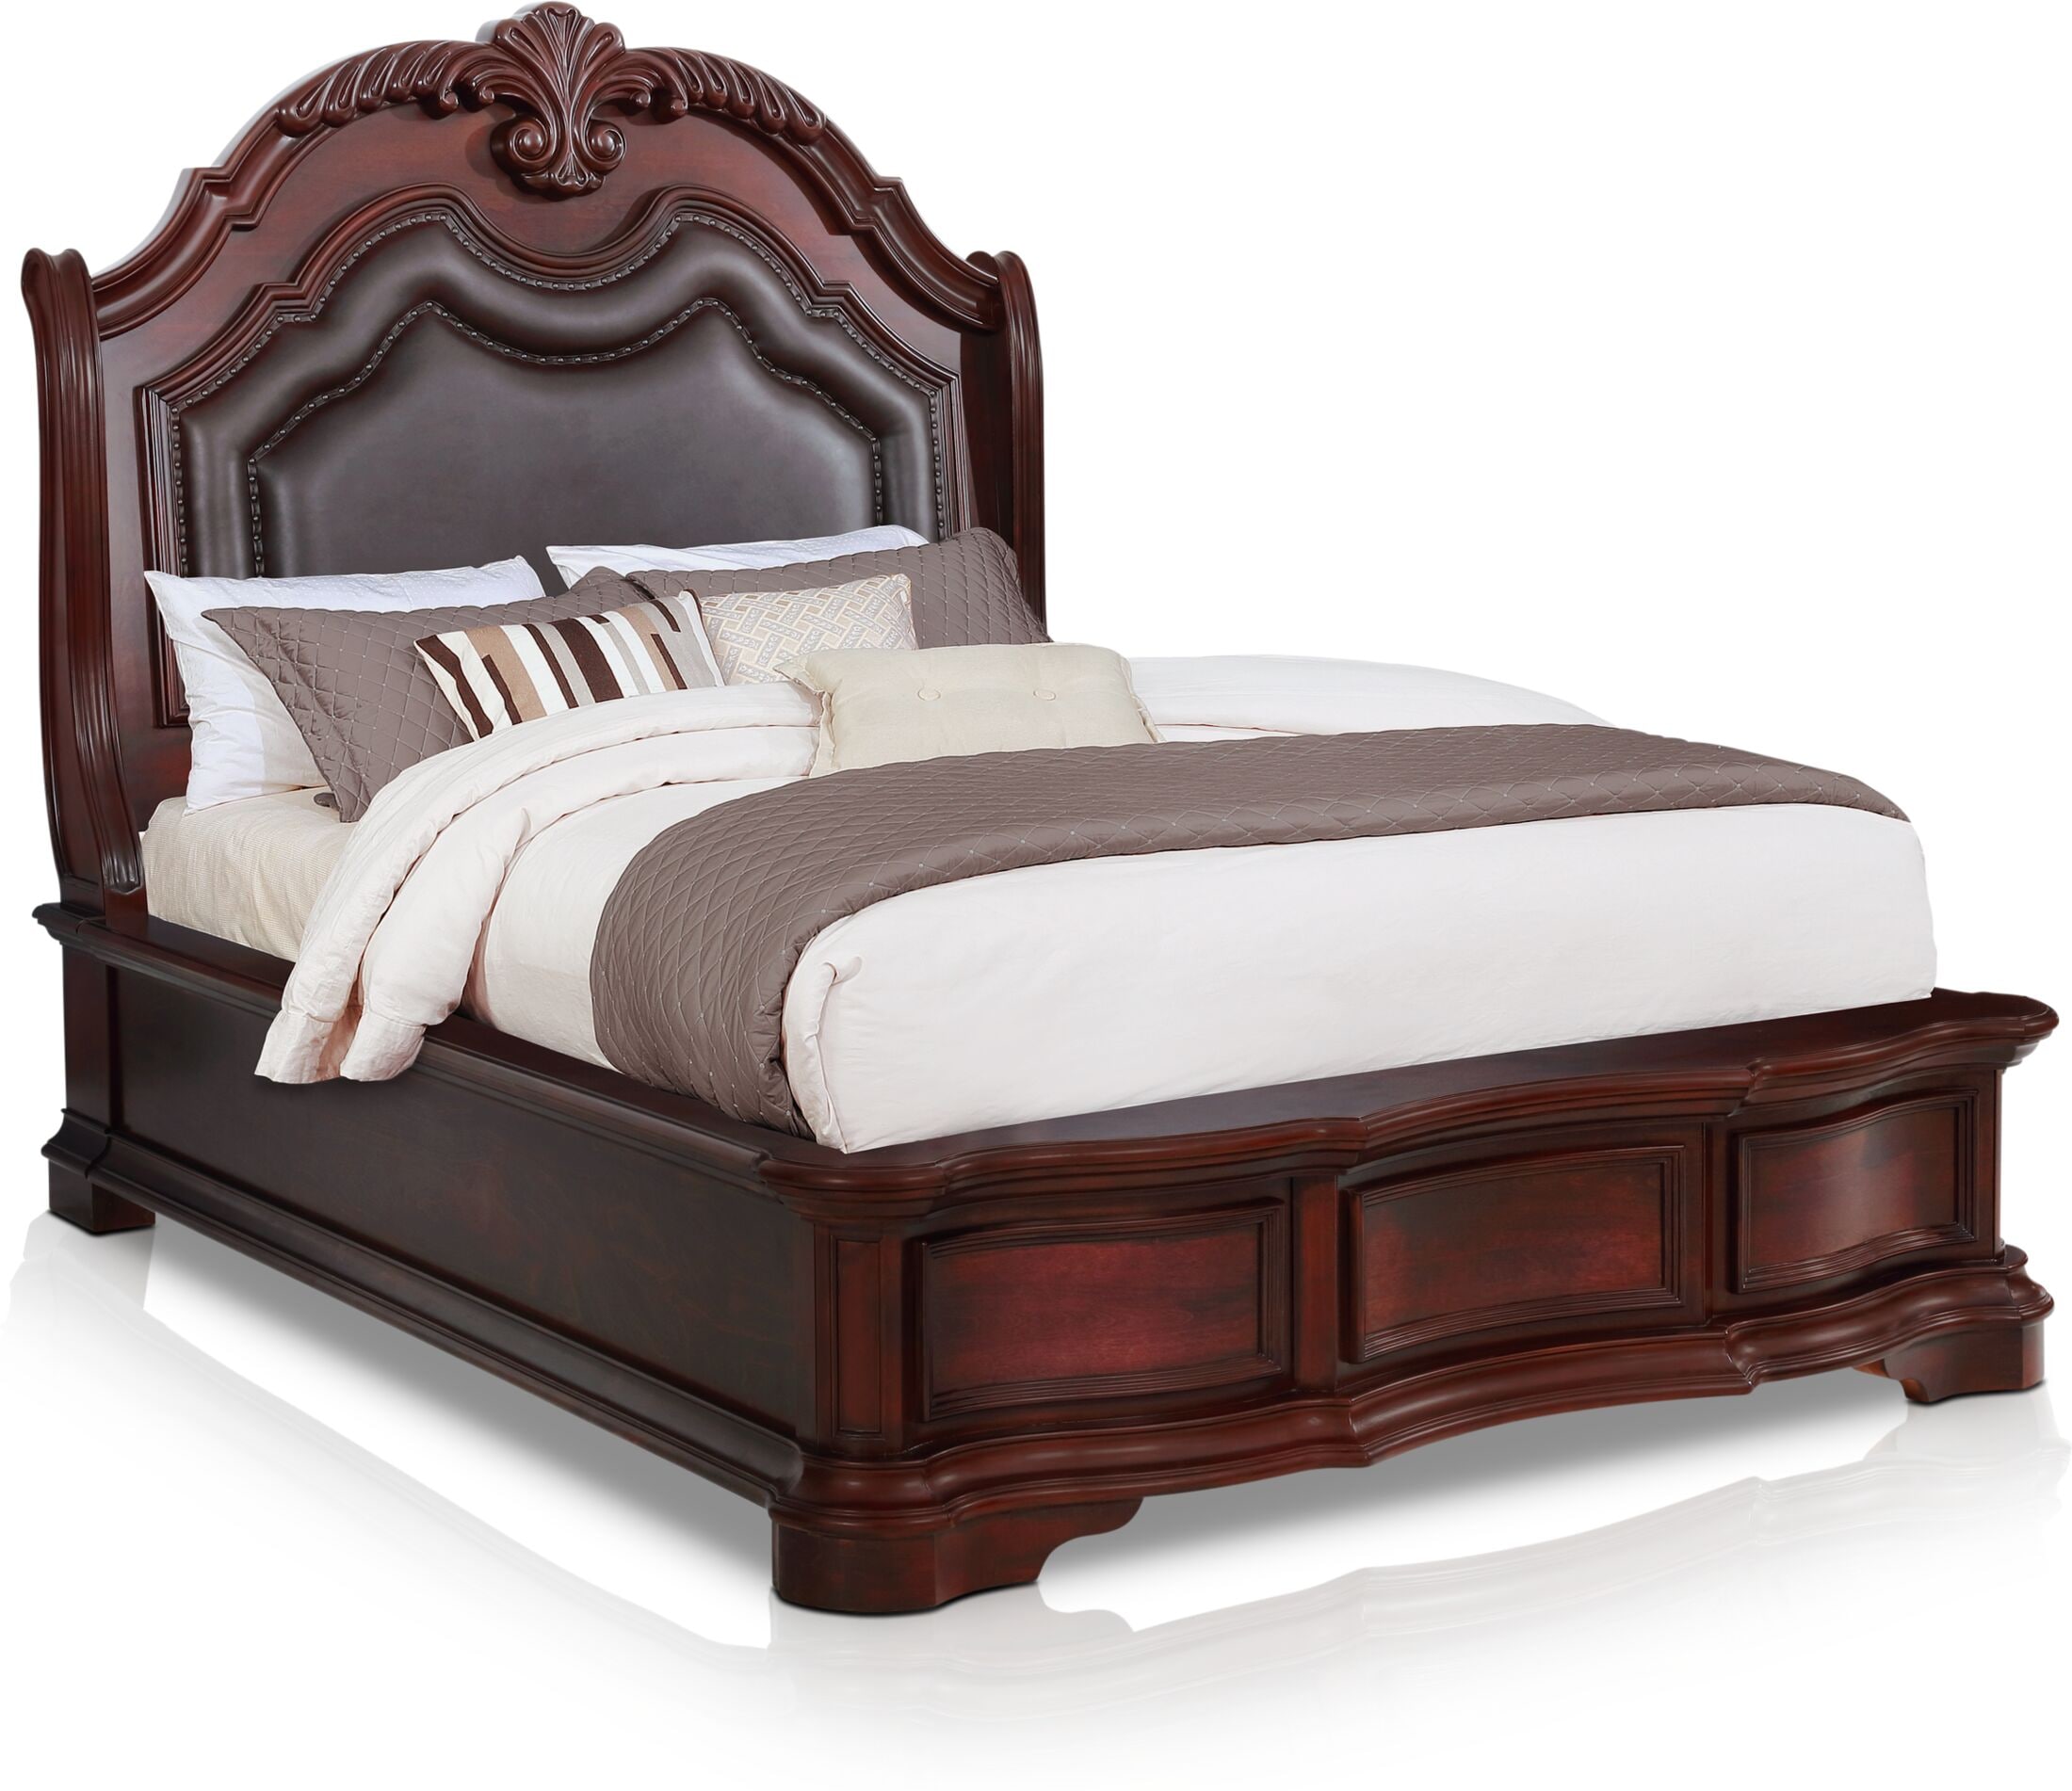 Gramercy Park Bed Value City Furniture, Value City Beds King Size